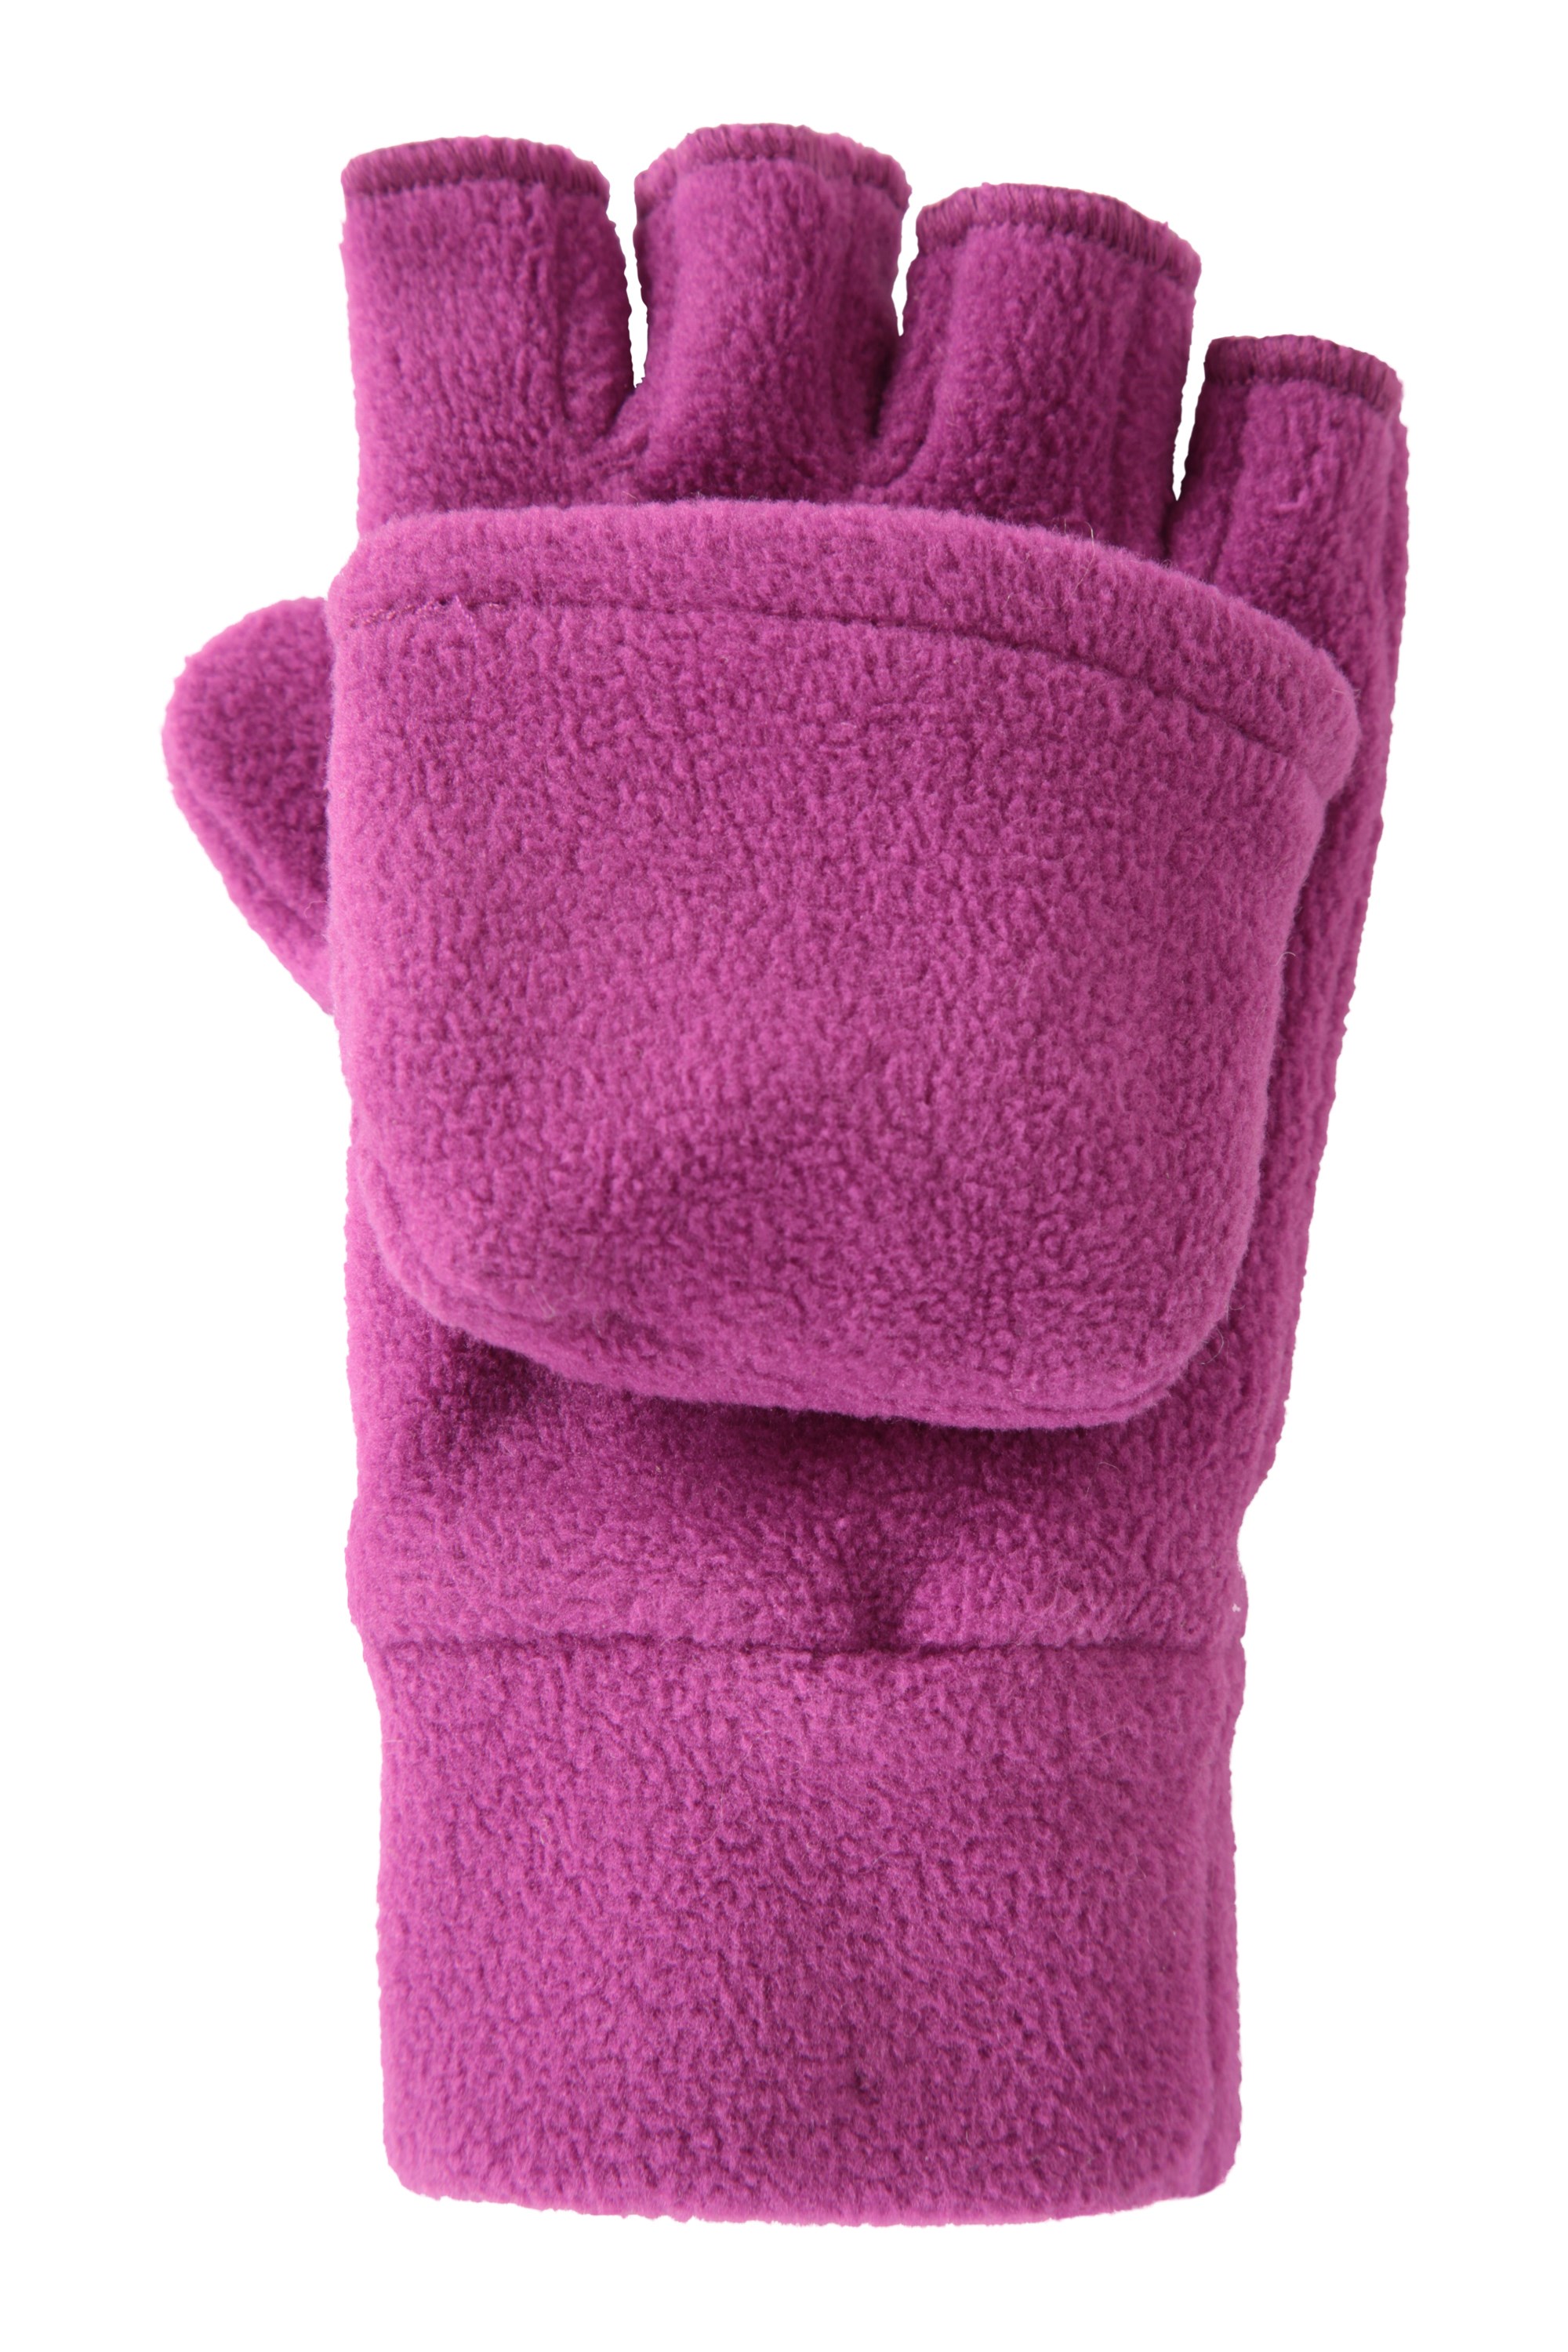 Mountain Warehouse Kid Unicorn Kids Knitted Glove Gloves 